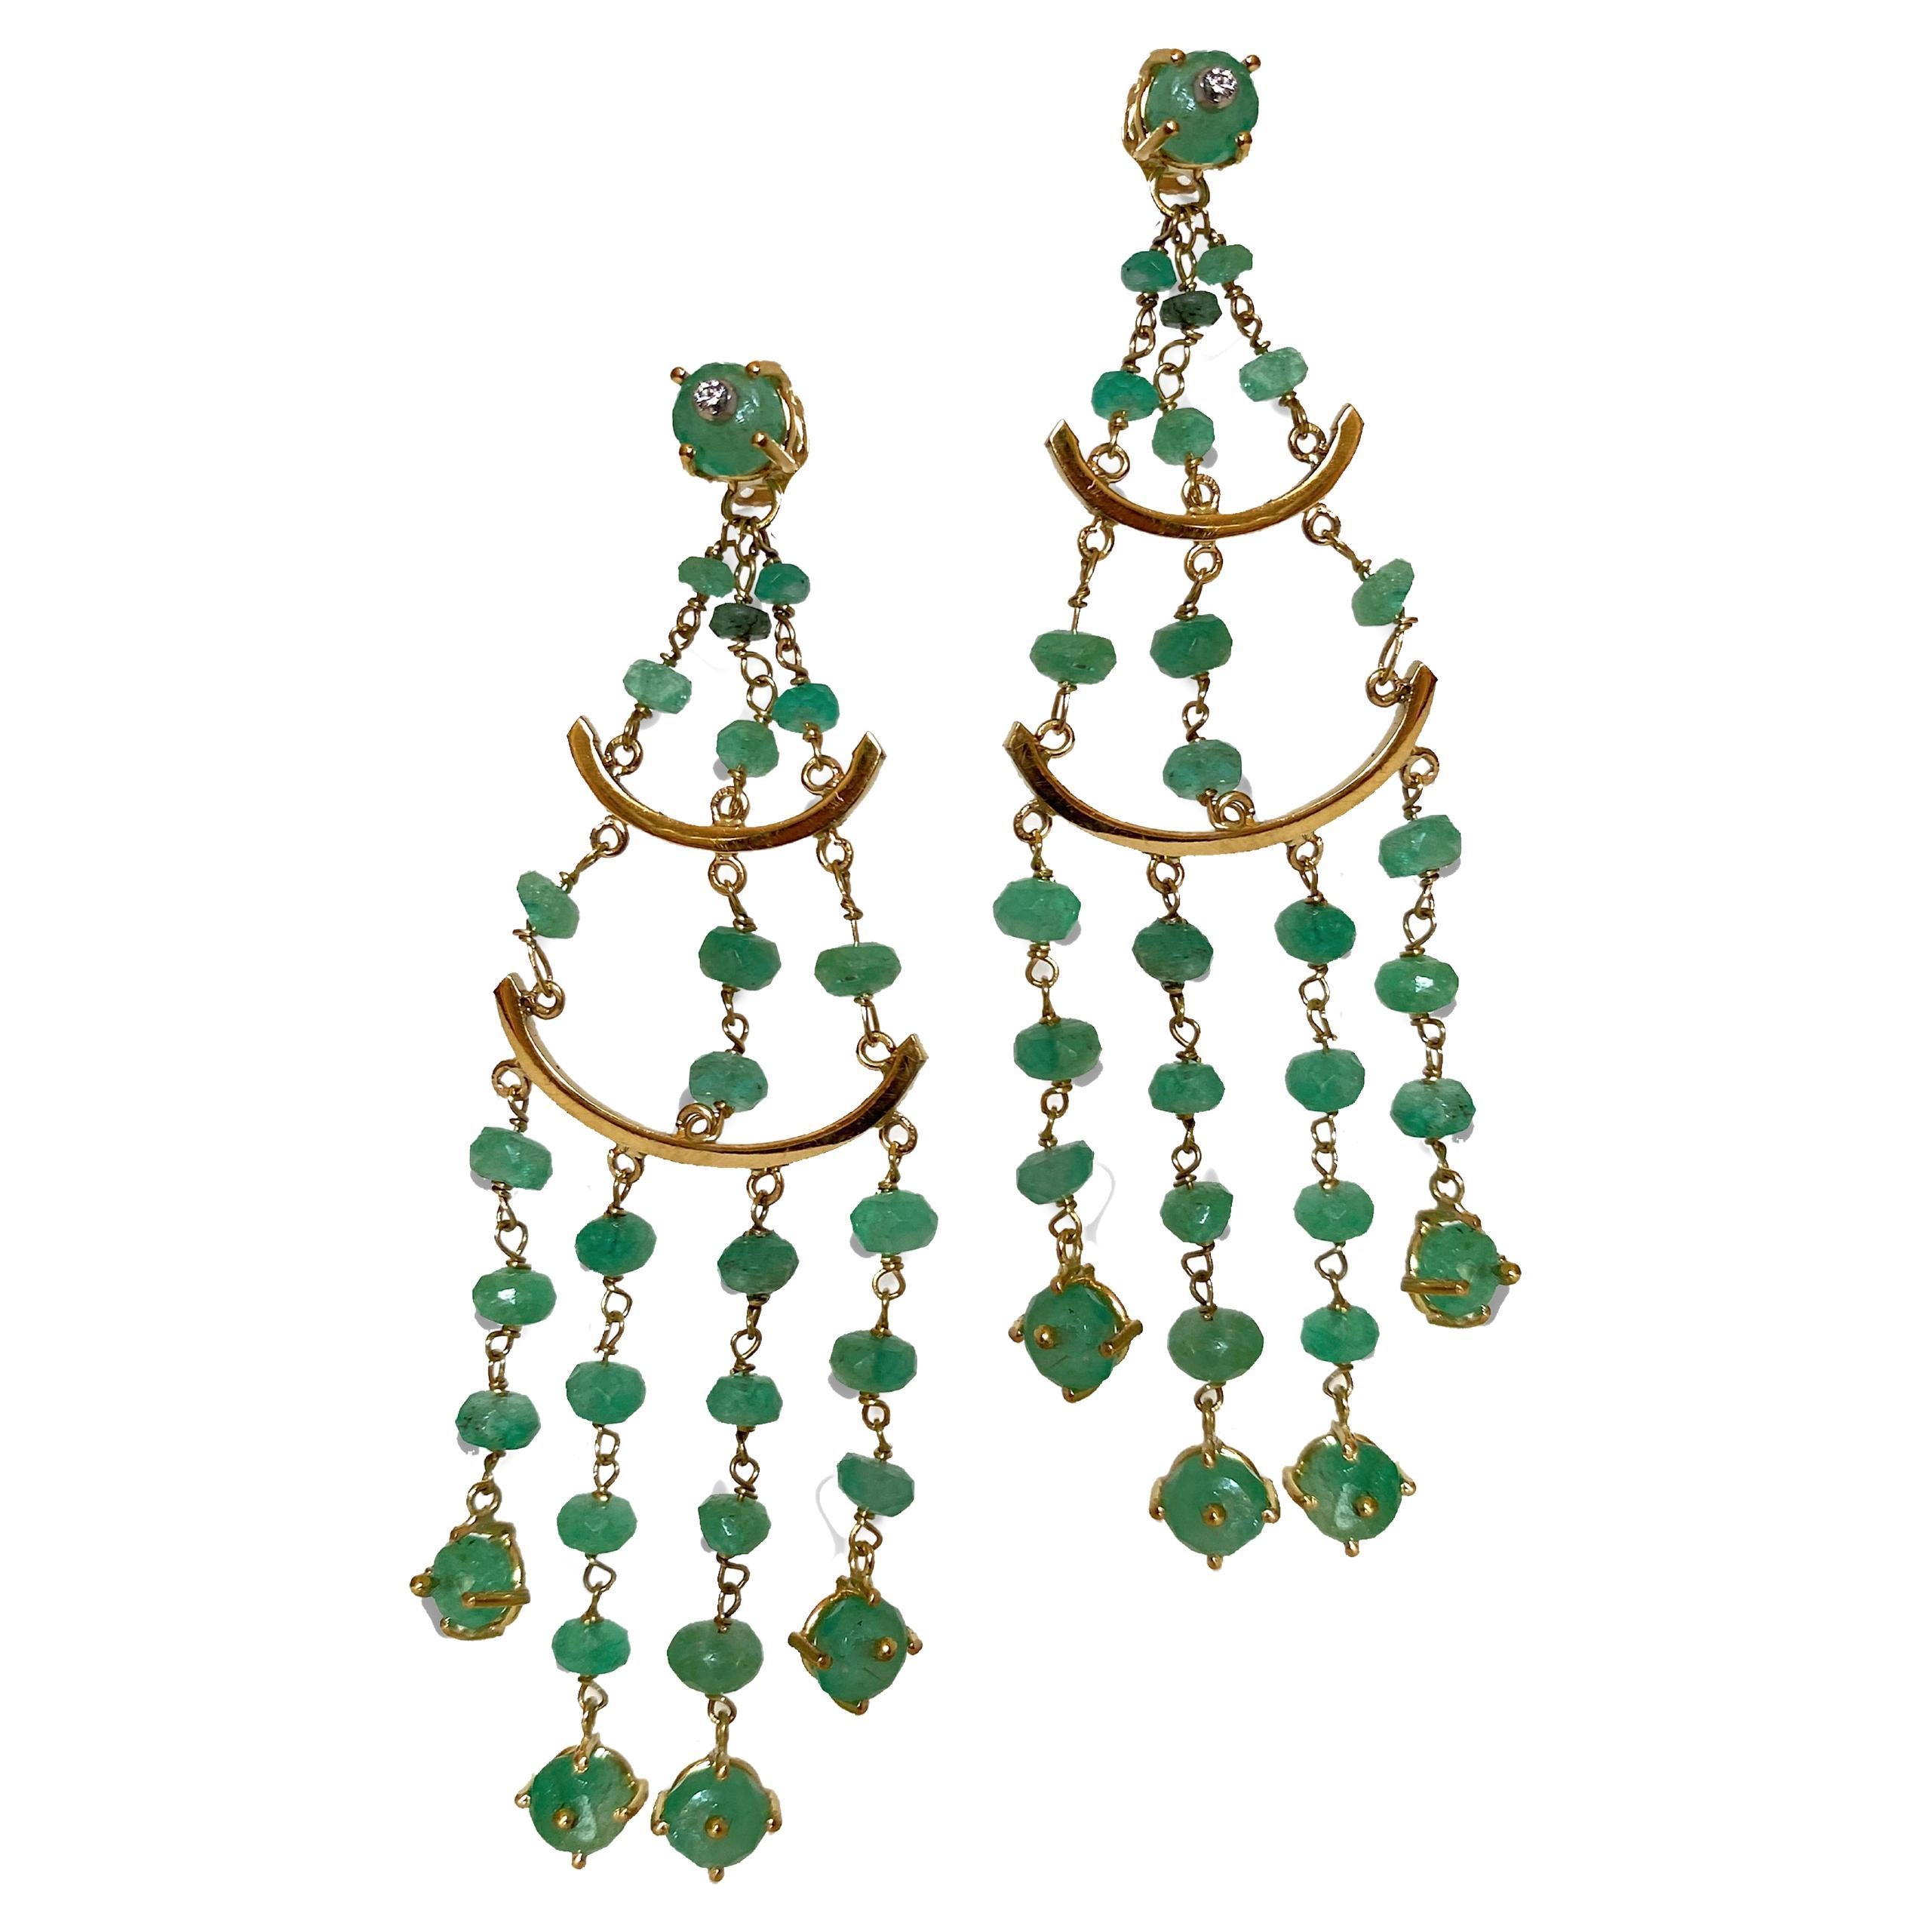 Rossella Ugolini Handcrafted Emerald Chandelier Earrings Italian Craftsmanship